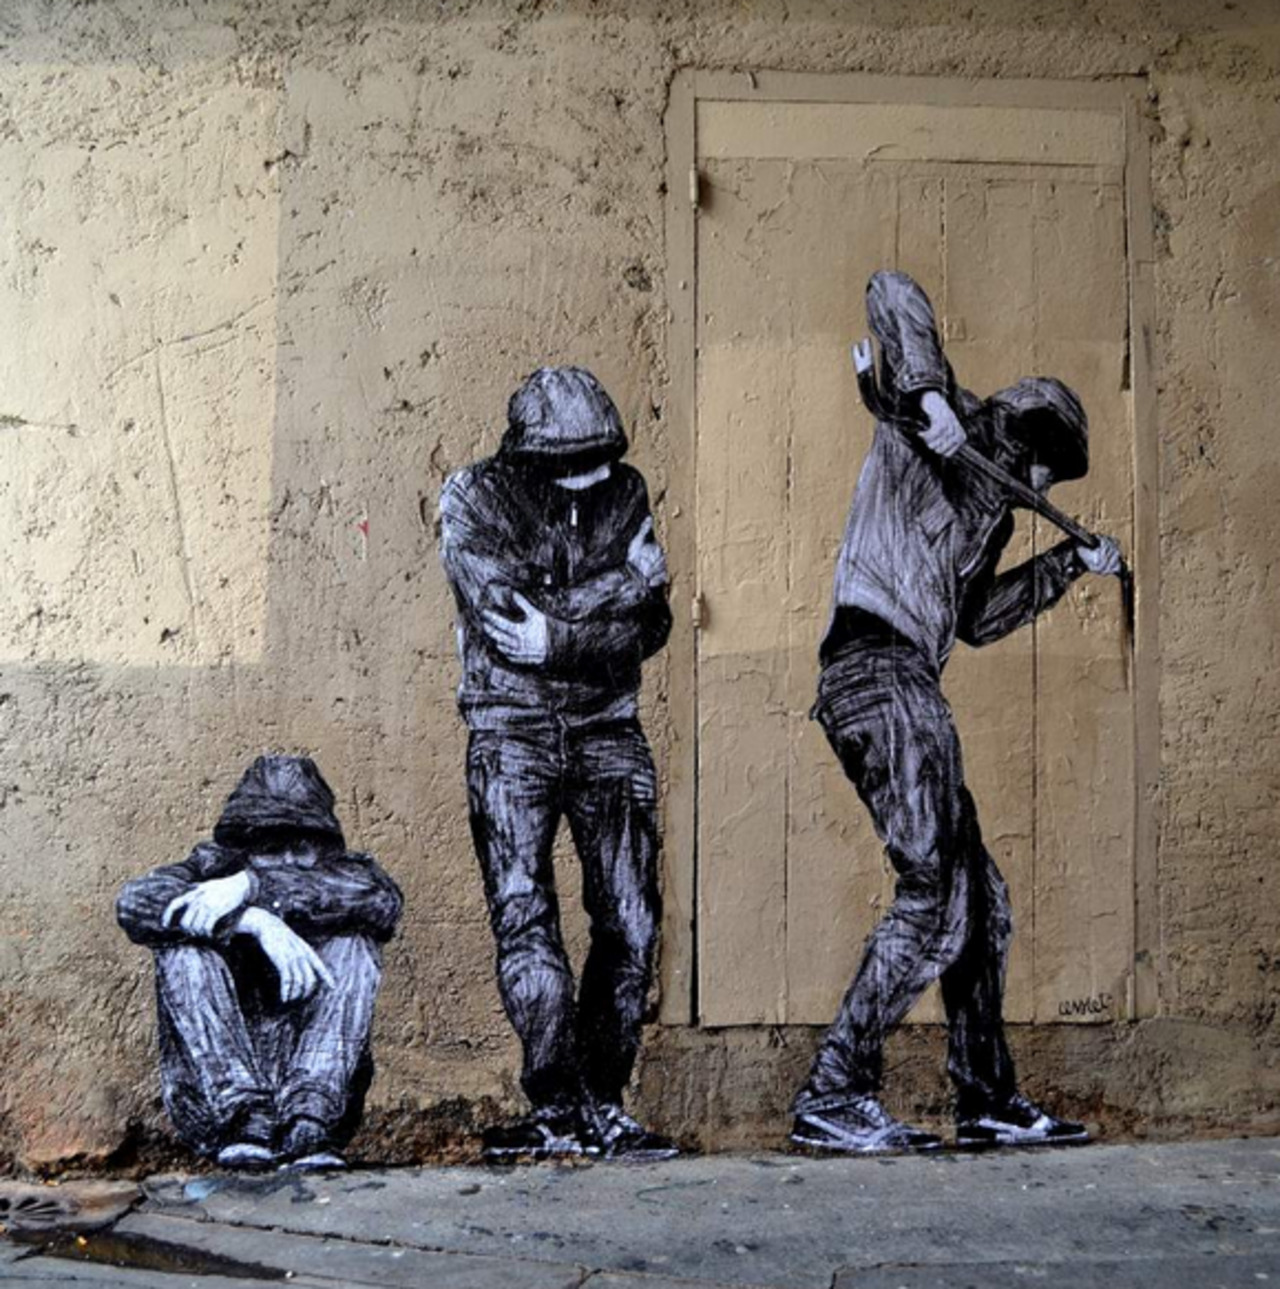 RT @MarcoMasci76: by #Levalet   http://www.levalet.org/2015/03/portes-ouvertes.html
#StreetArt #ArteUrbana #Graffiti #arte #art http://t.co/geBFJ1ywoj